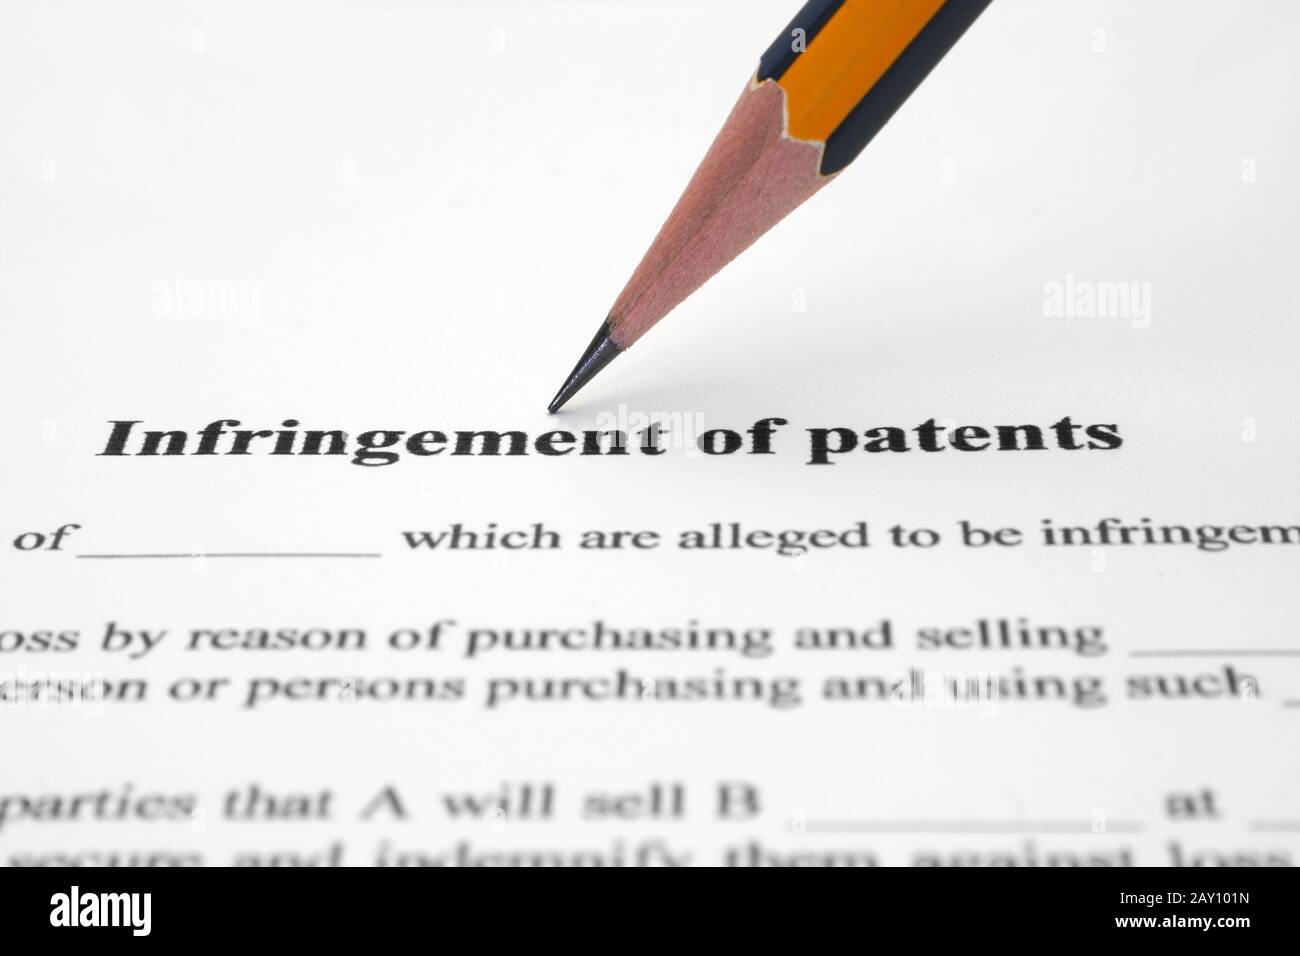 Infringement of patents Stock Photo